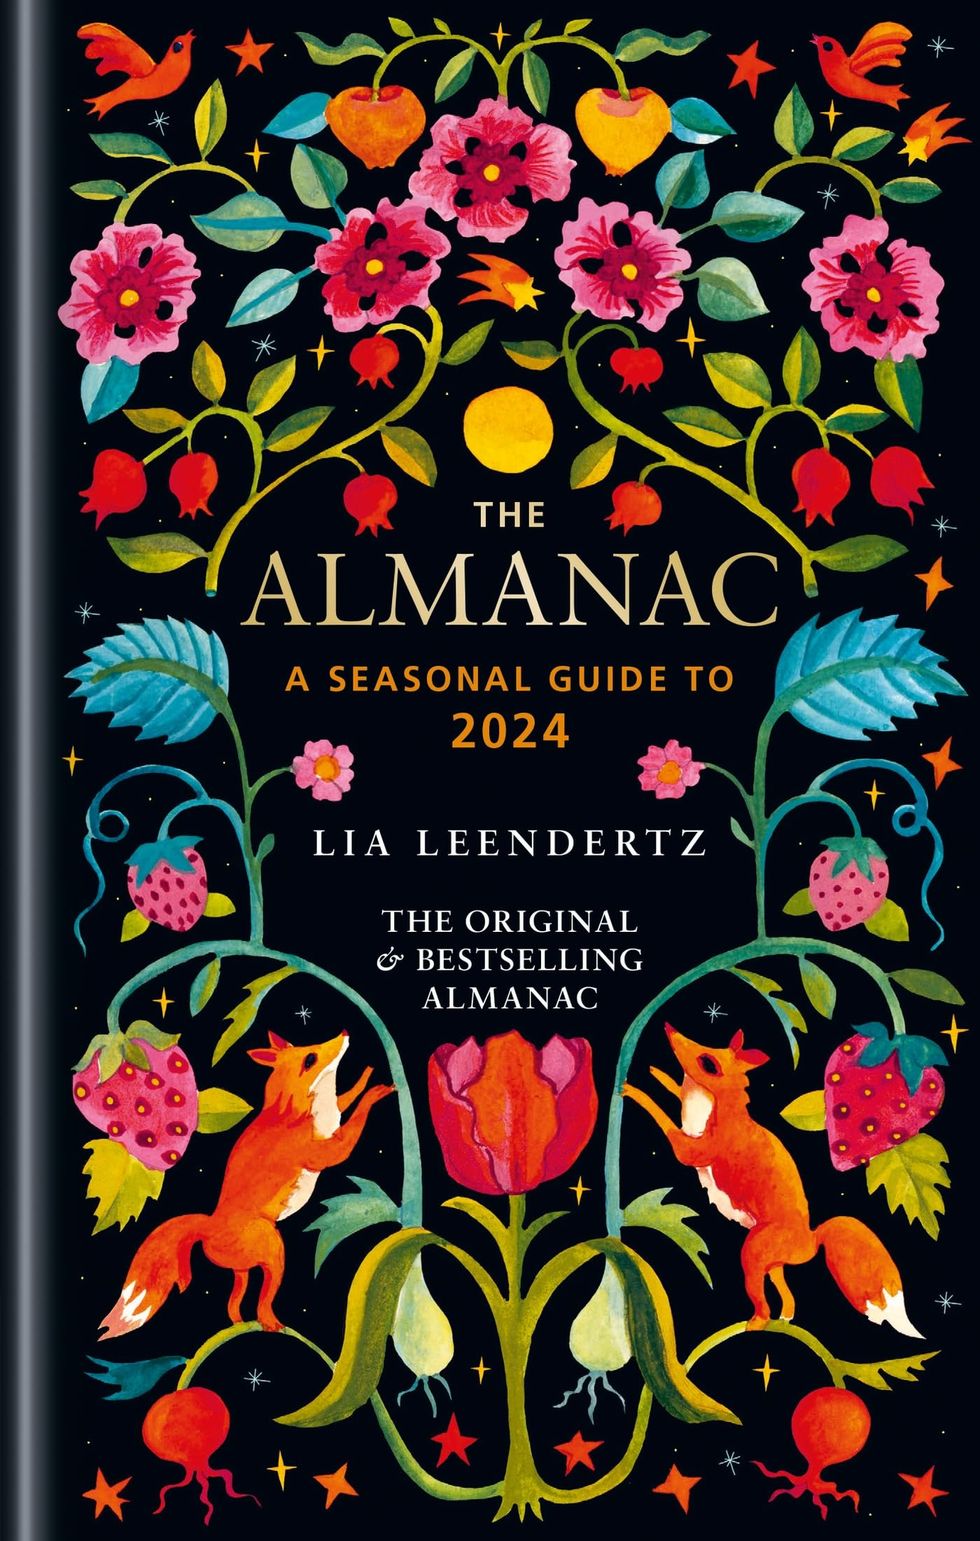 The Almanac: A Seasonal Guide to 2024 by Lia Leendertz